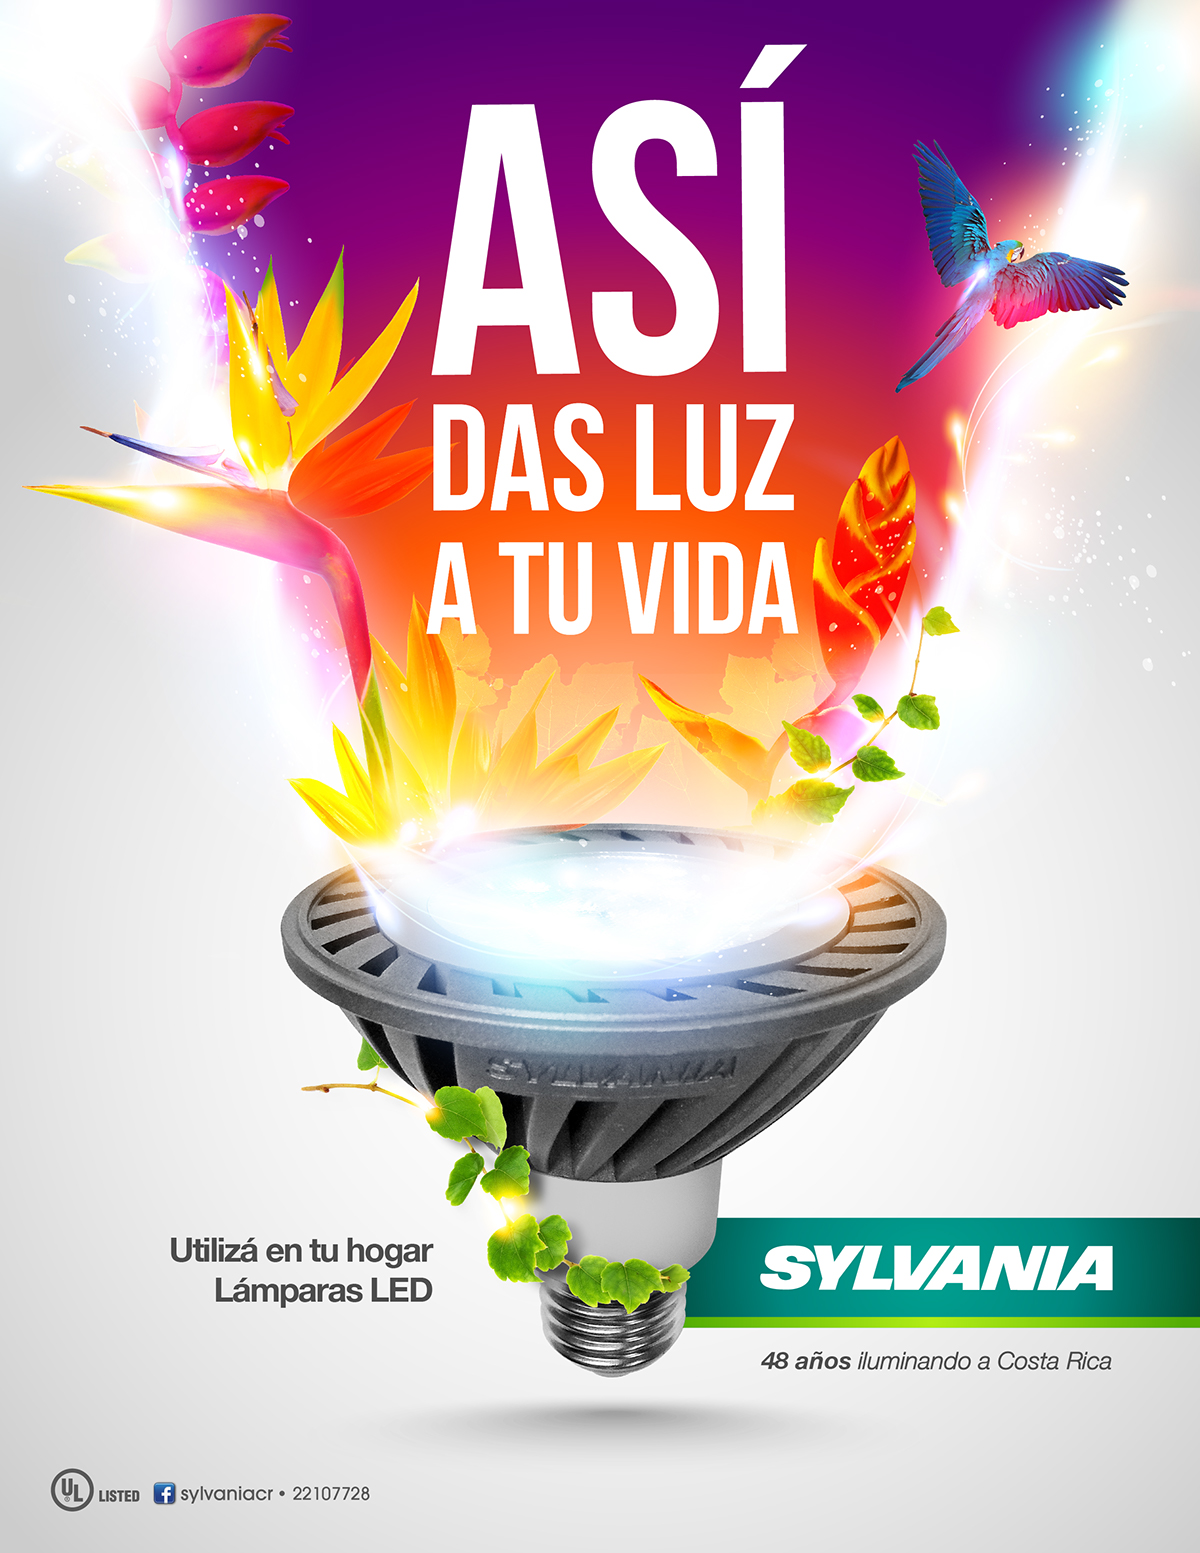 sylvania Costa Rica lighting products light bulbs lamps Fixtures Nature green Tropical color fauna Flora